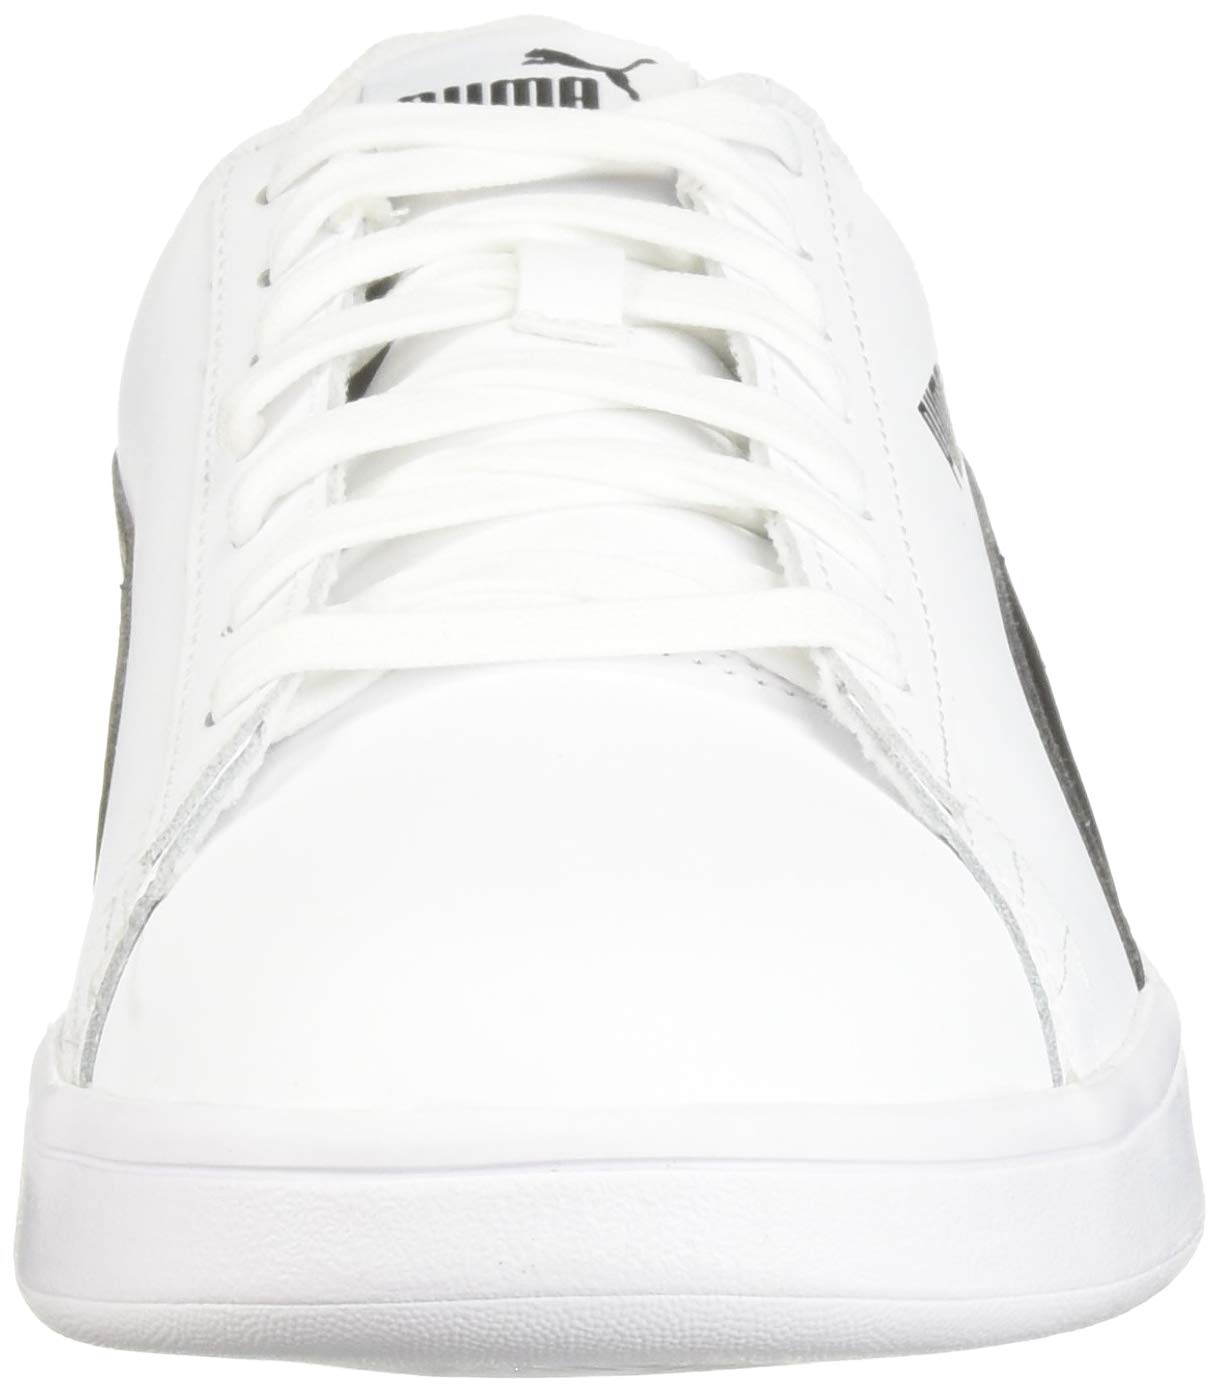 PUMA Men's Smash V2 Casual Sneaker - White or Black Mens Tennis Shoes (White/Black, 8) - image 2 of 8